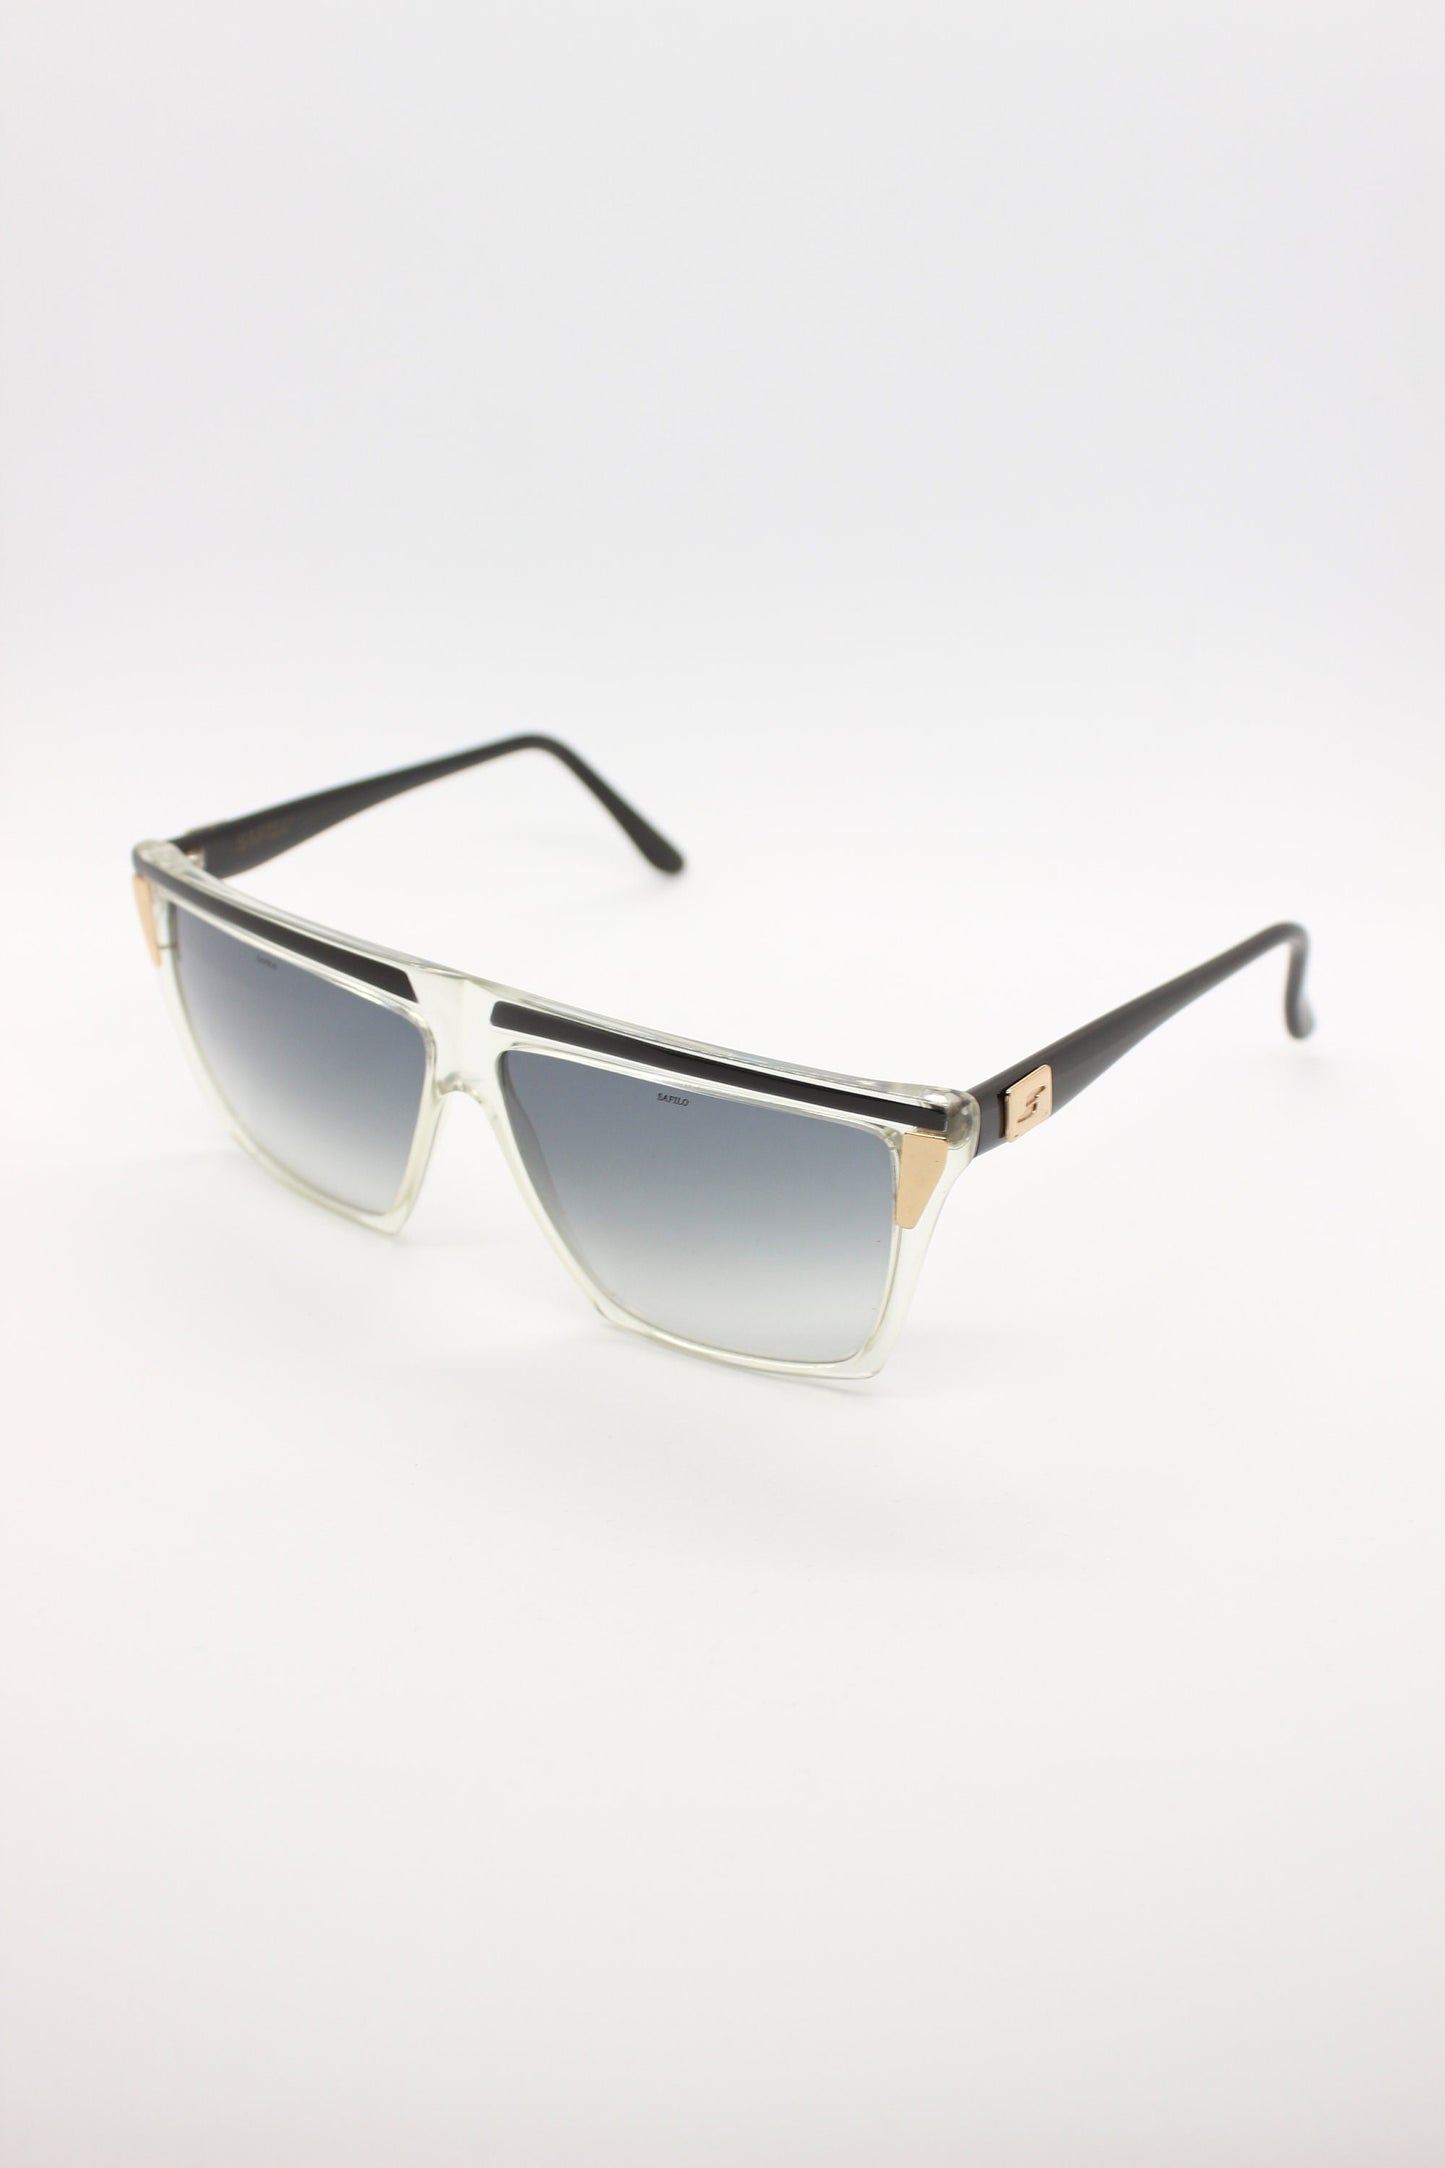 SAFILO MOd. Sentieri 90s Vintage New Old Stock sunglasses. Never worn